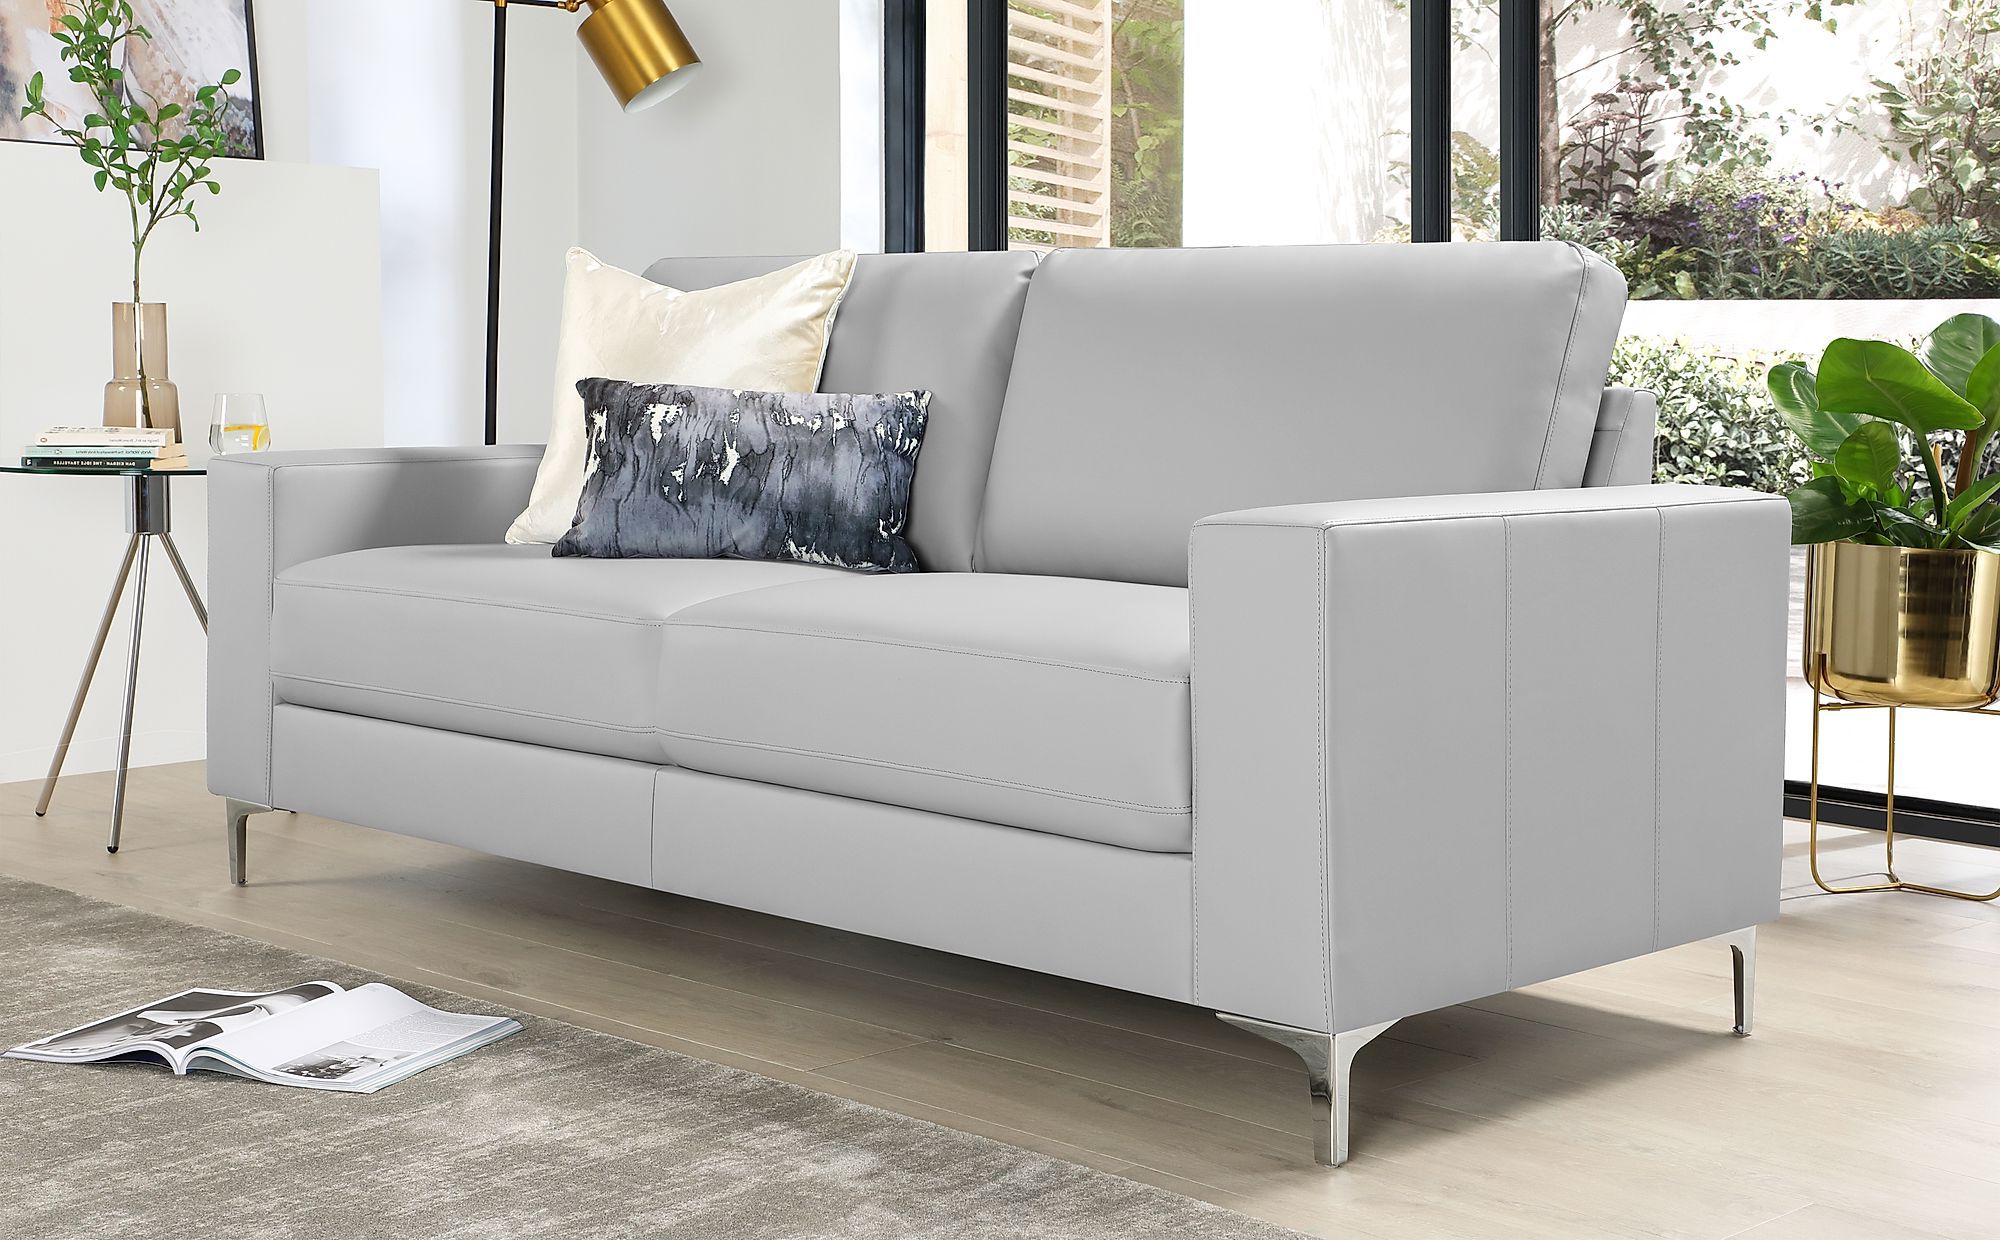 Furniture Choice Regarding Sofas In Light Grey (Photo 2 of 15)